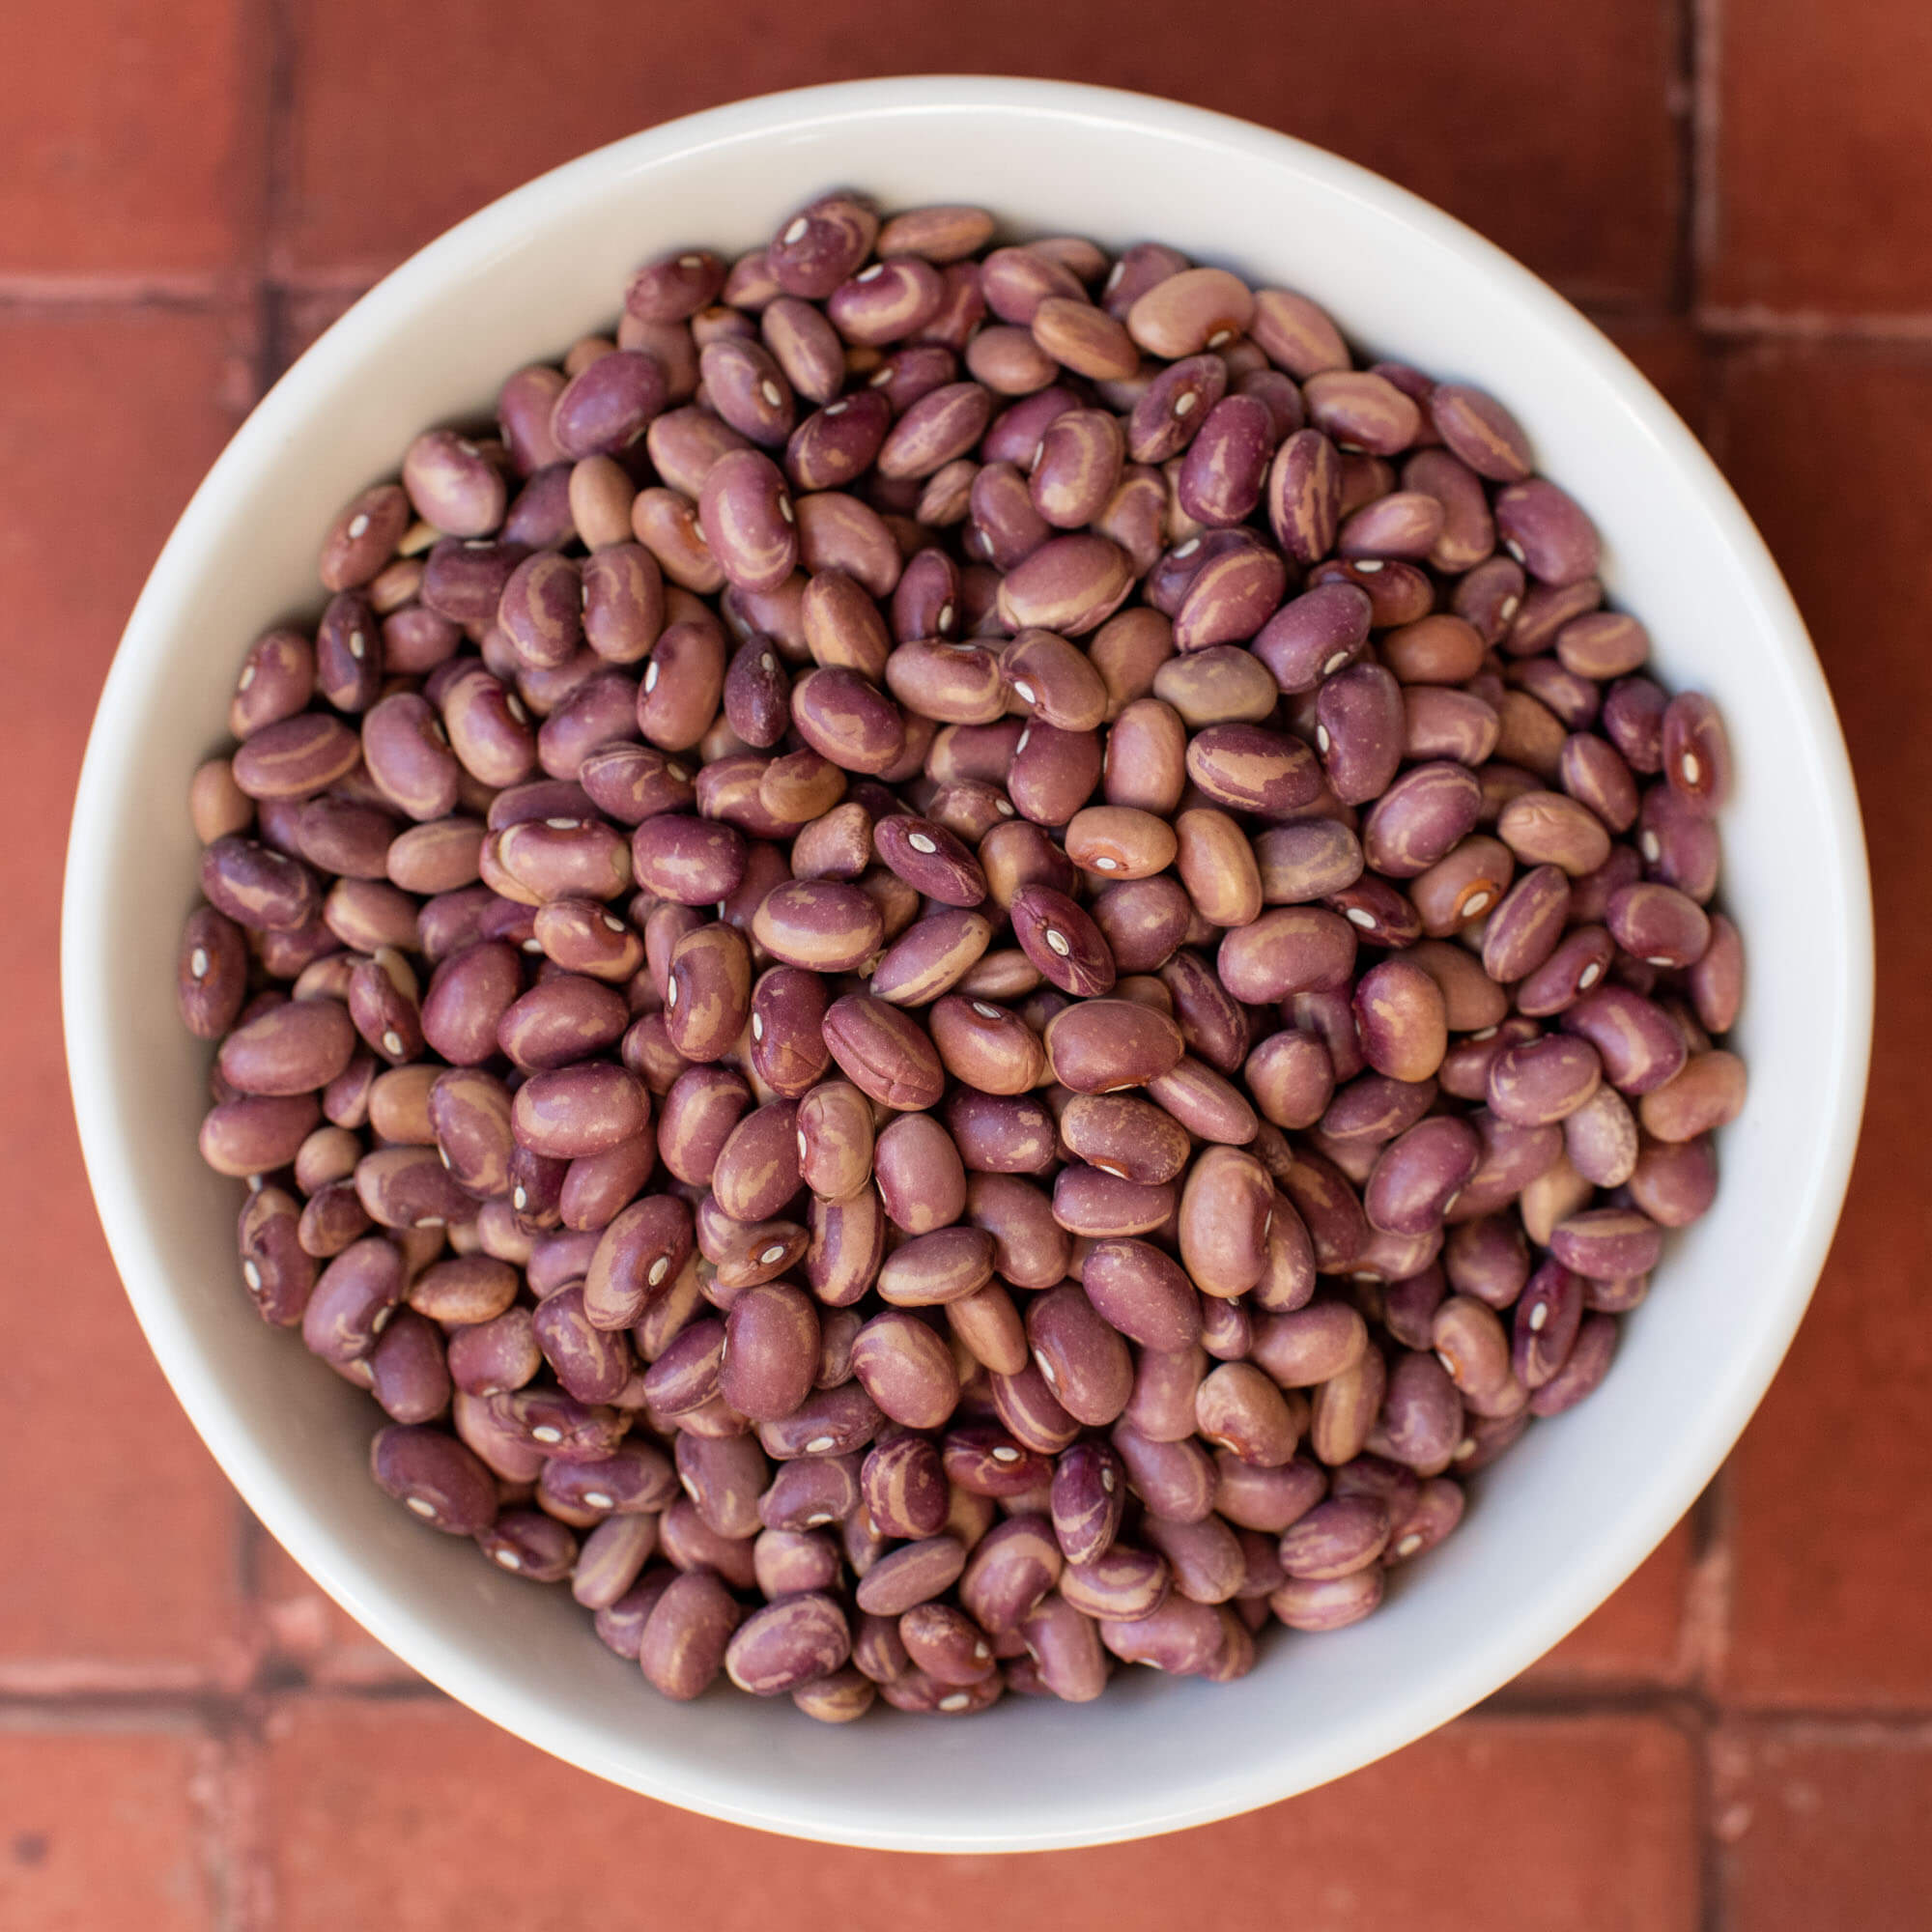 Primary Beans Organic Flor de Junio beans